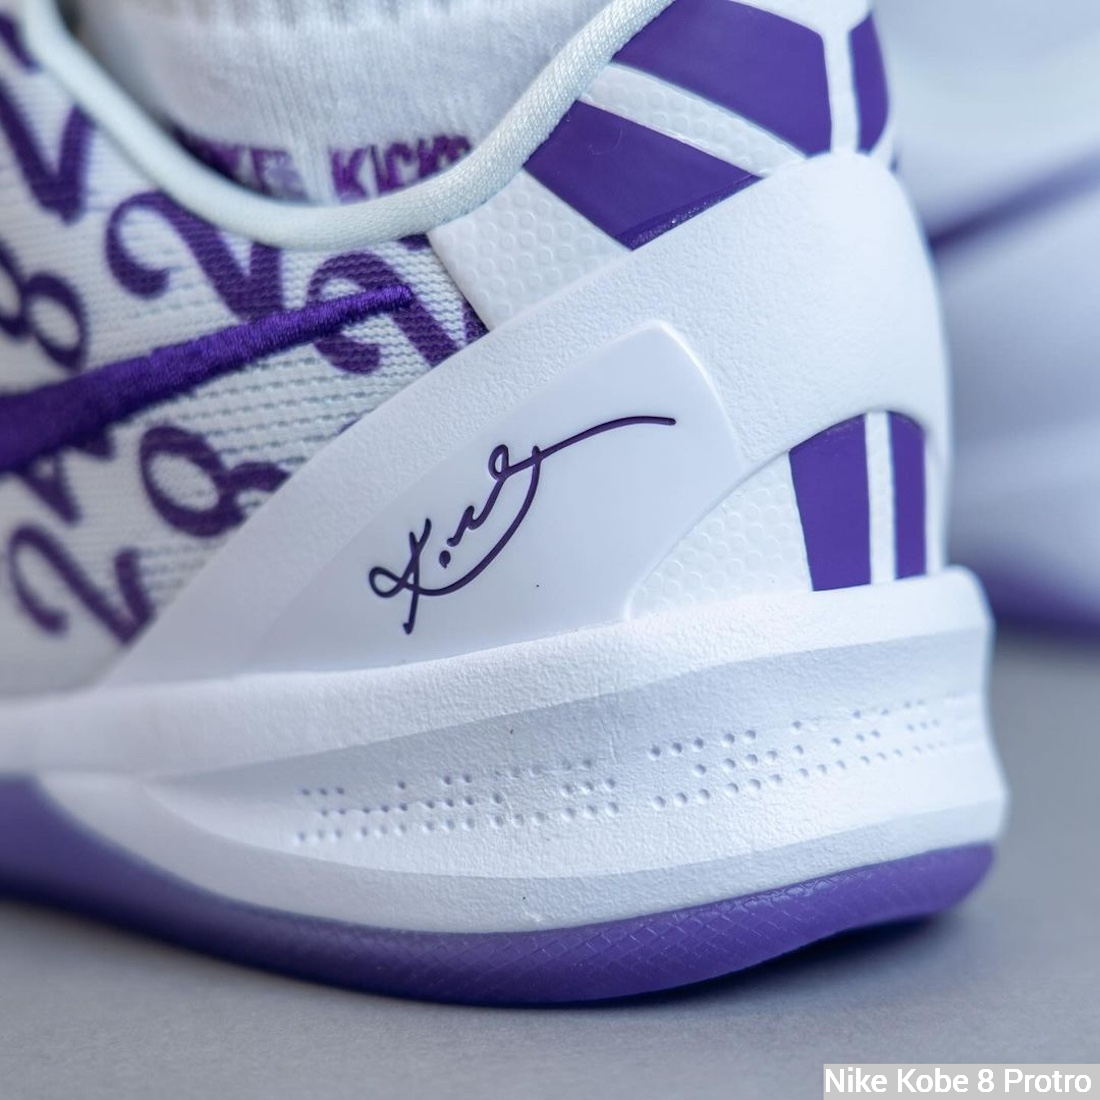 Nike Kobe 8 Protro White/Court Purple on feet - heel and heel cap side